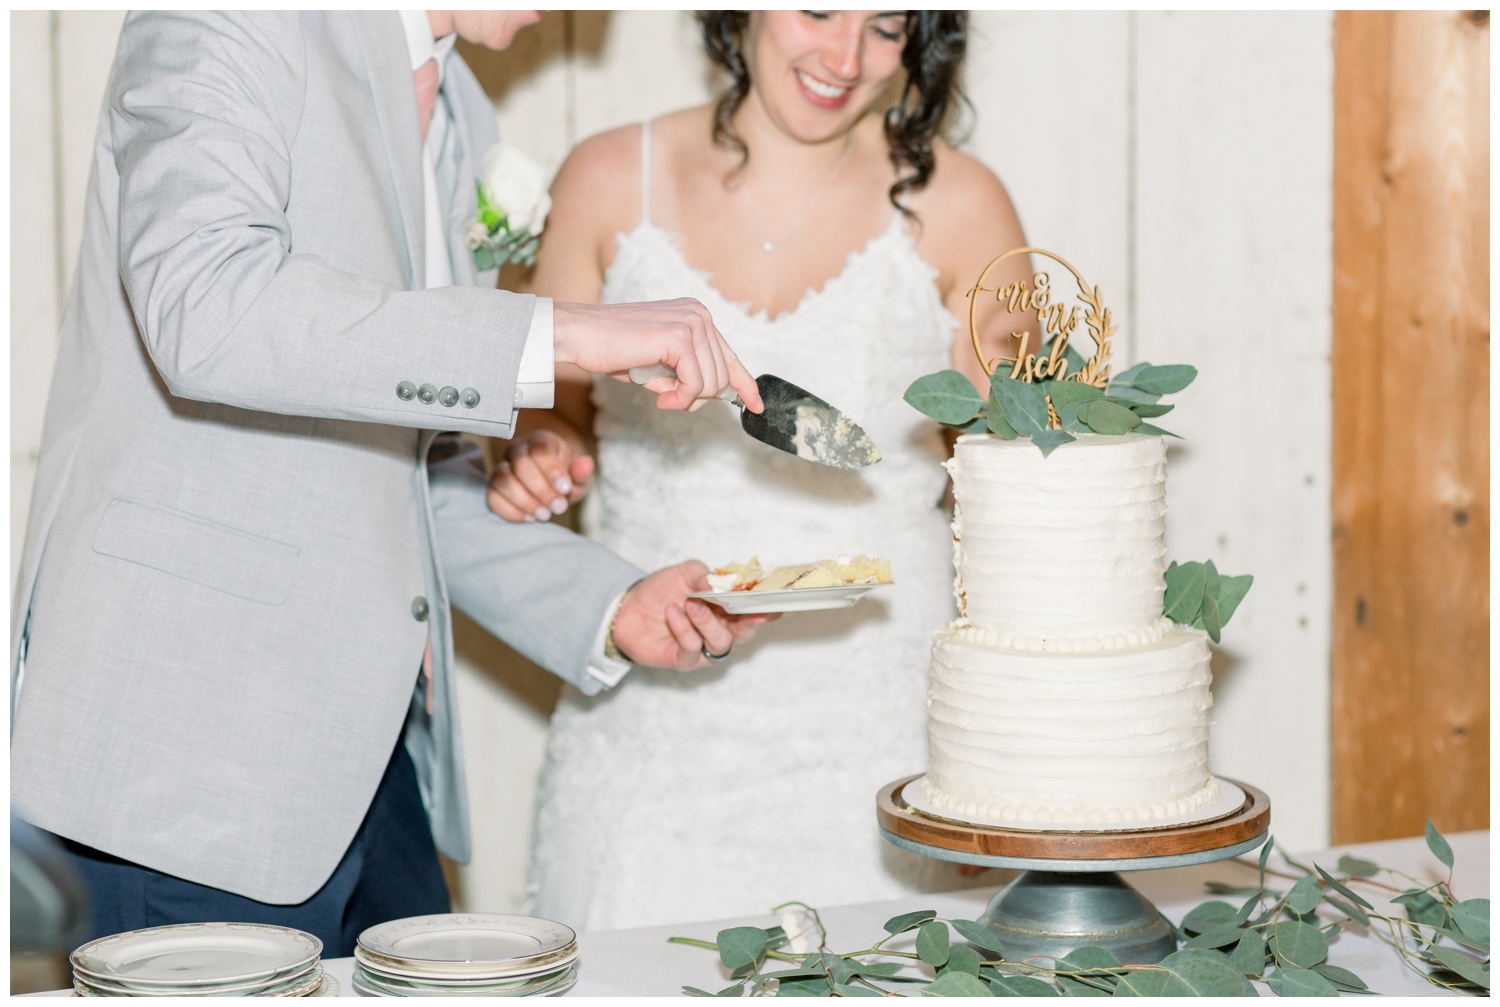 Cutting the Cake at Micro Wedding